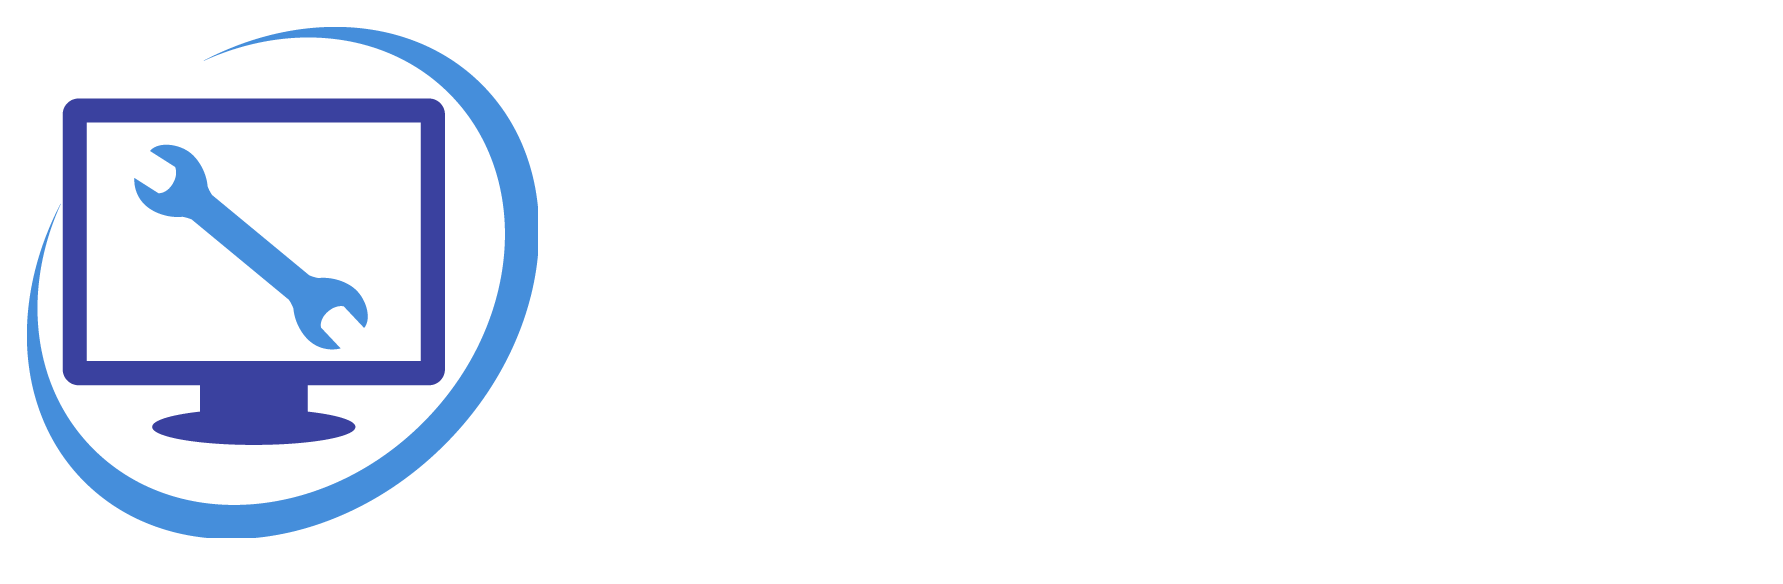 John McCrossan Computer